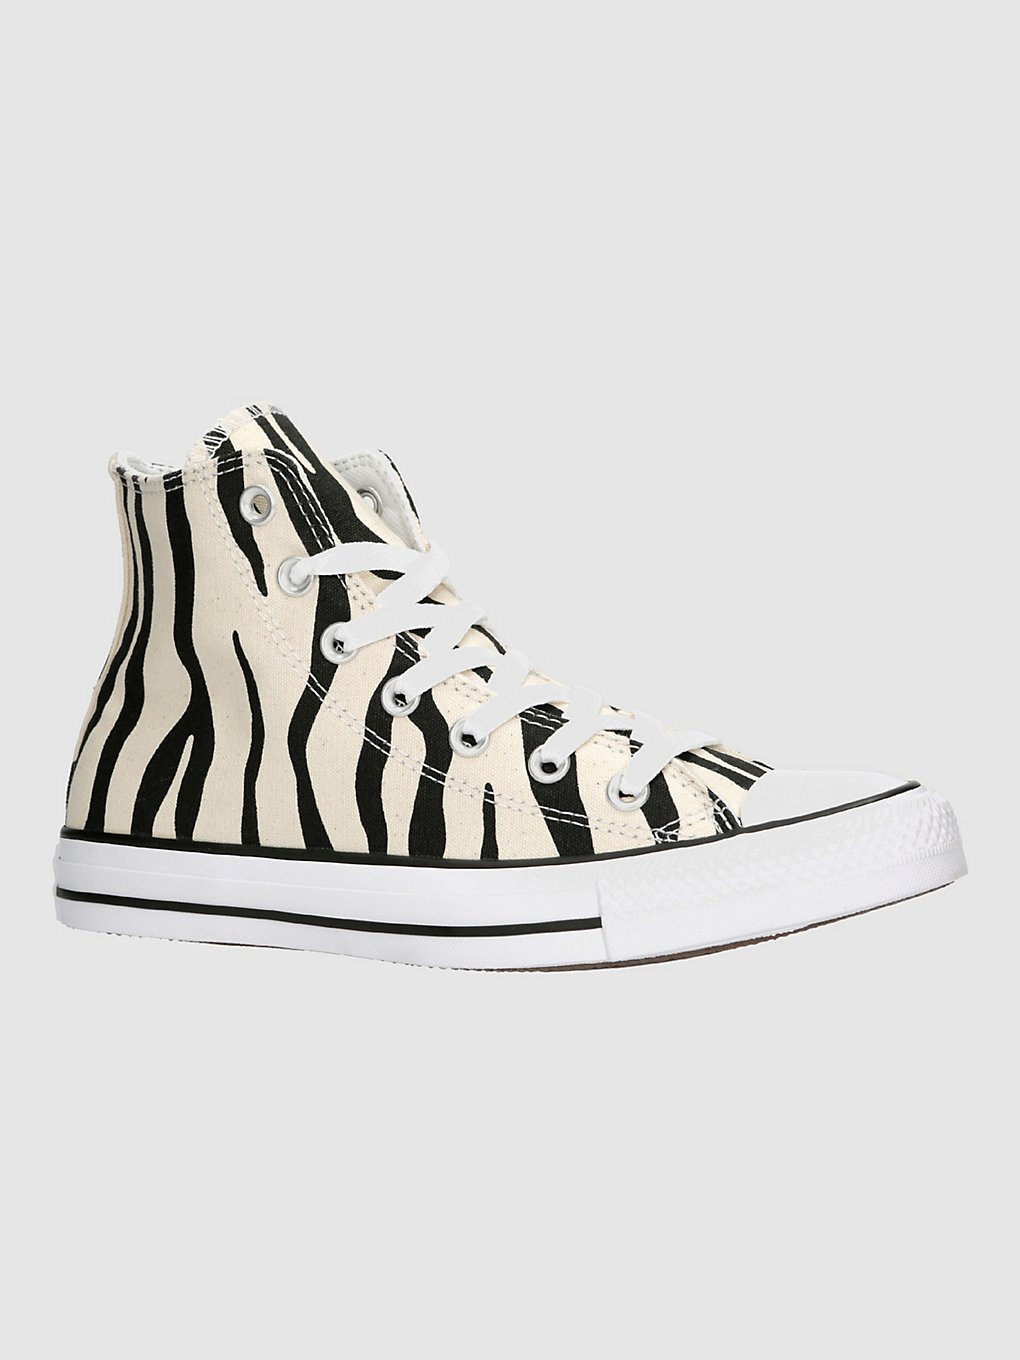 converse chuck taylor all star canvas zebra hi sneakers white